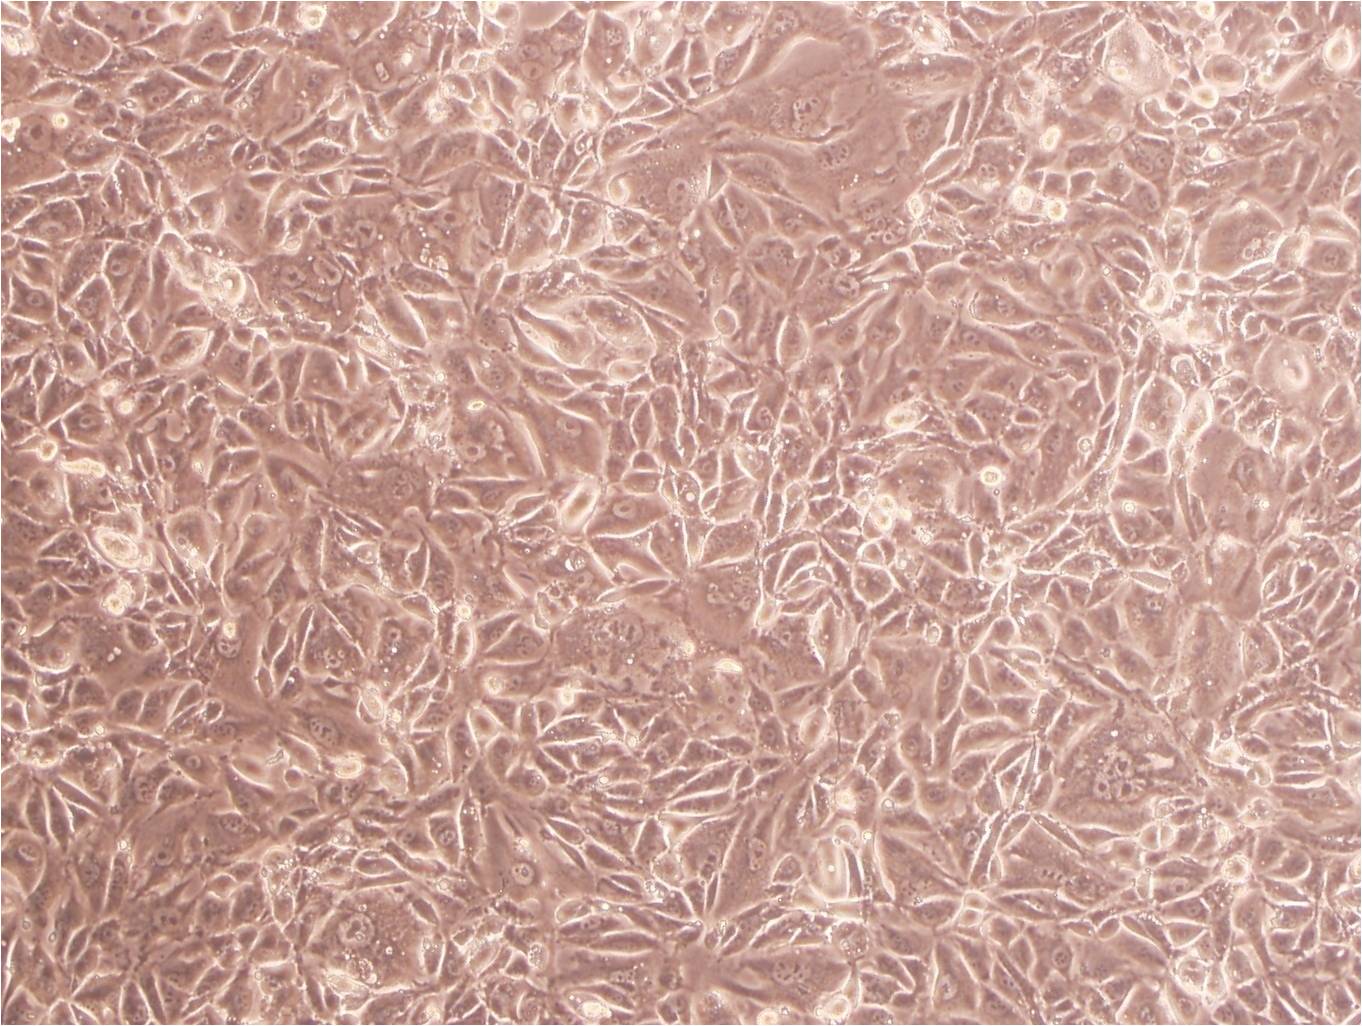 SACC-83 Fresh Cells|涎腺腺样囊性癌细胞(送STR基因图谱),SACC-83 Fresh Cells